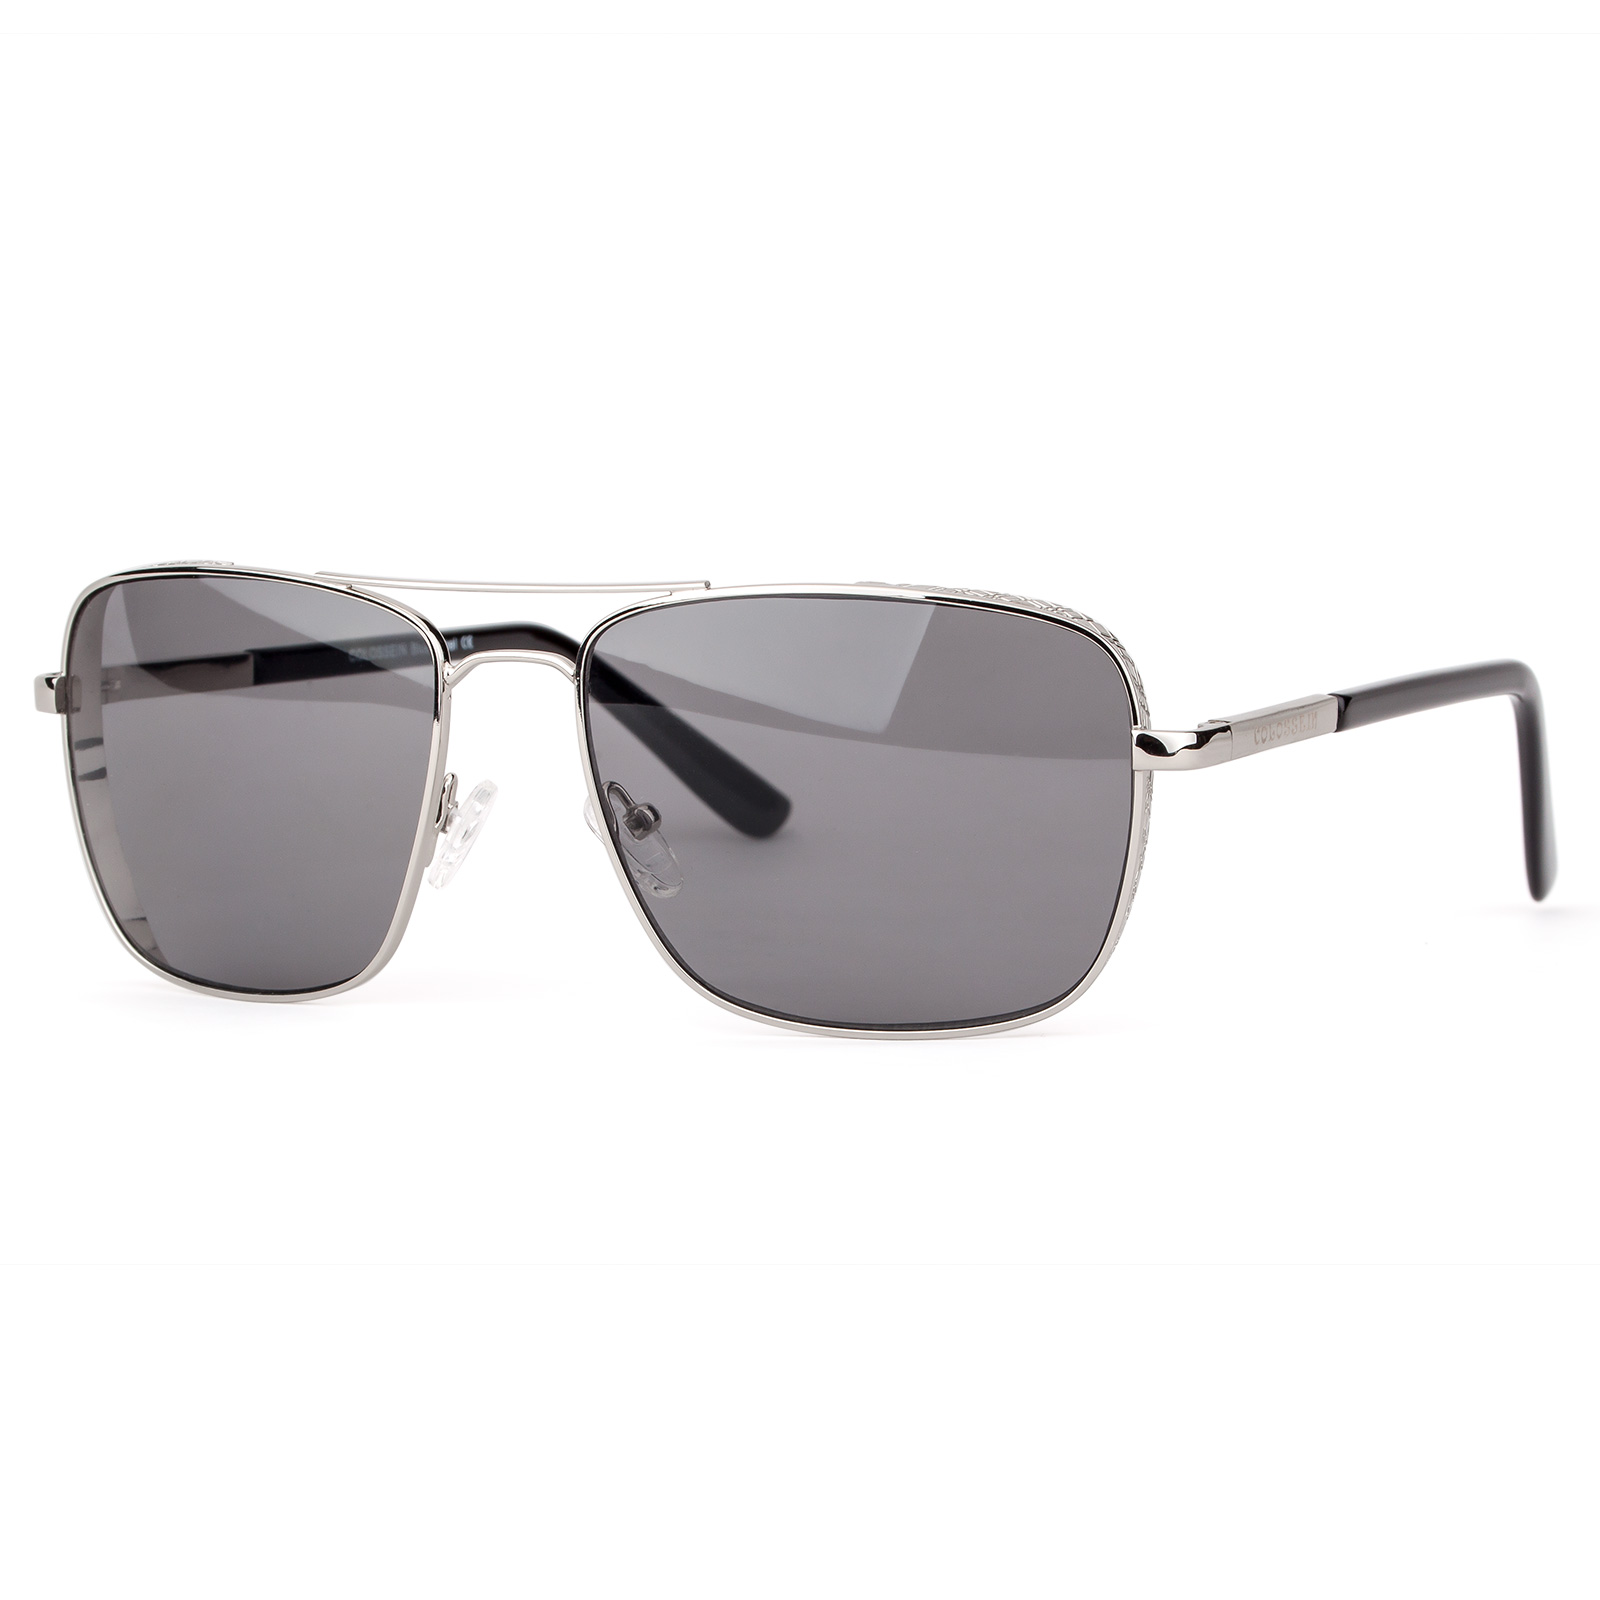 Square Aviator Sunglasses Polarized UV Protection Classic Retro Rectangular Metal Frame